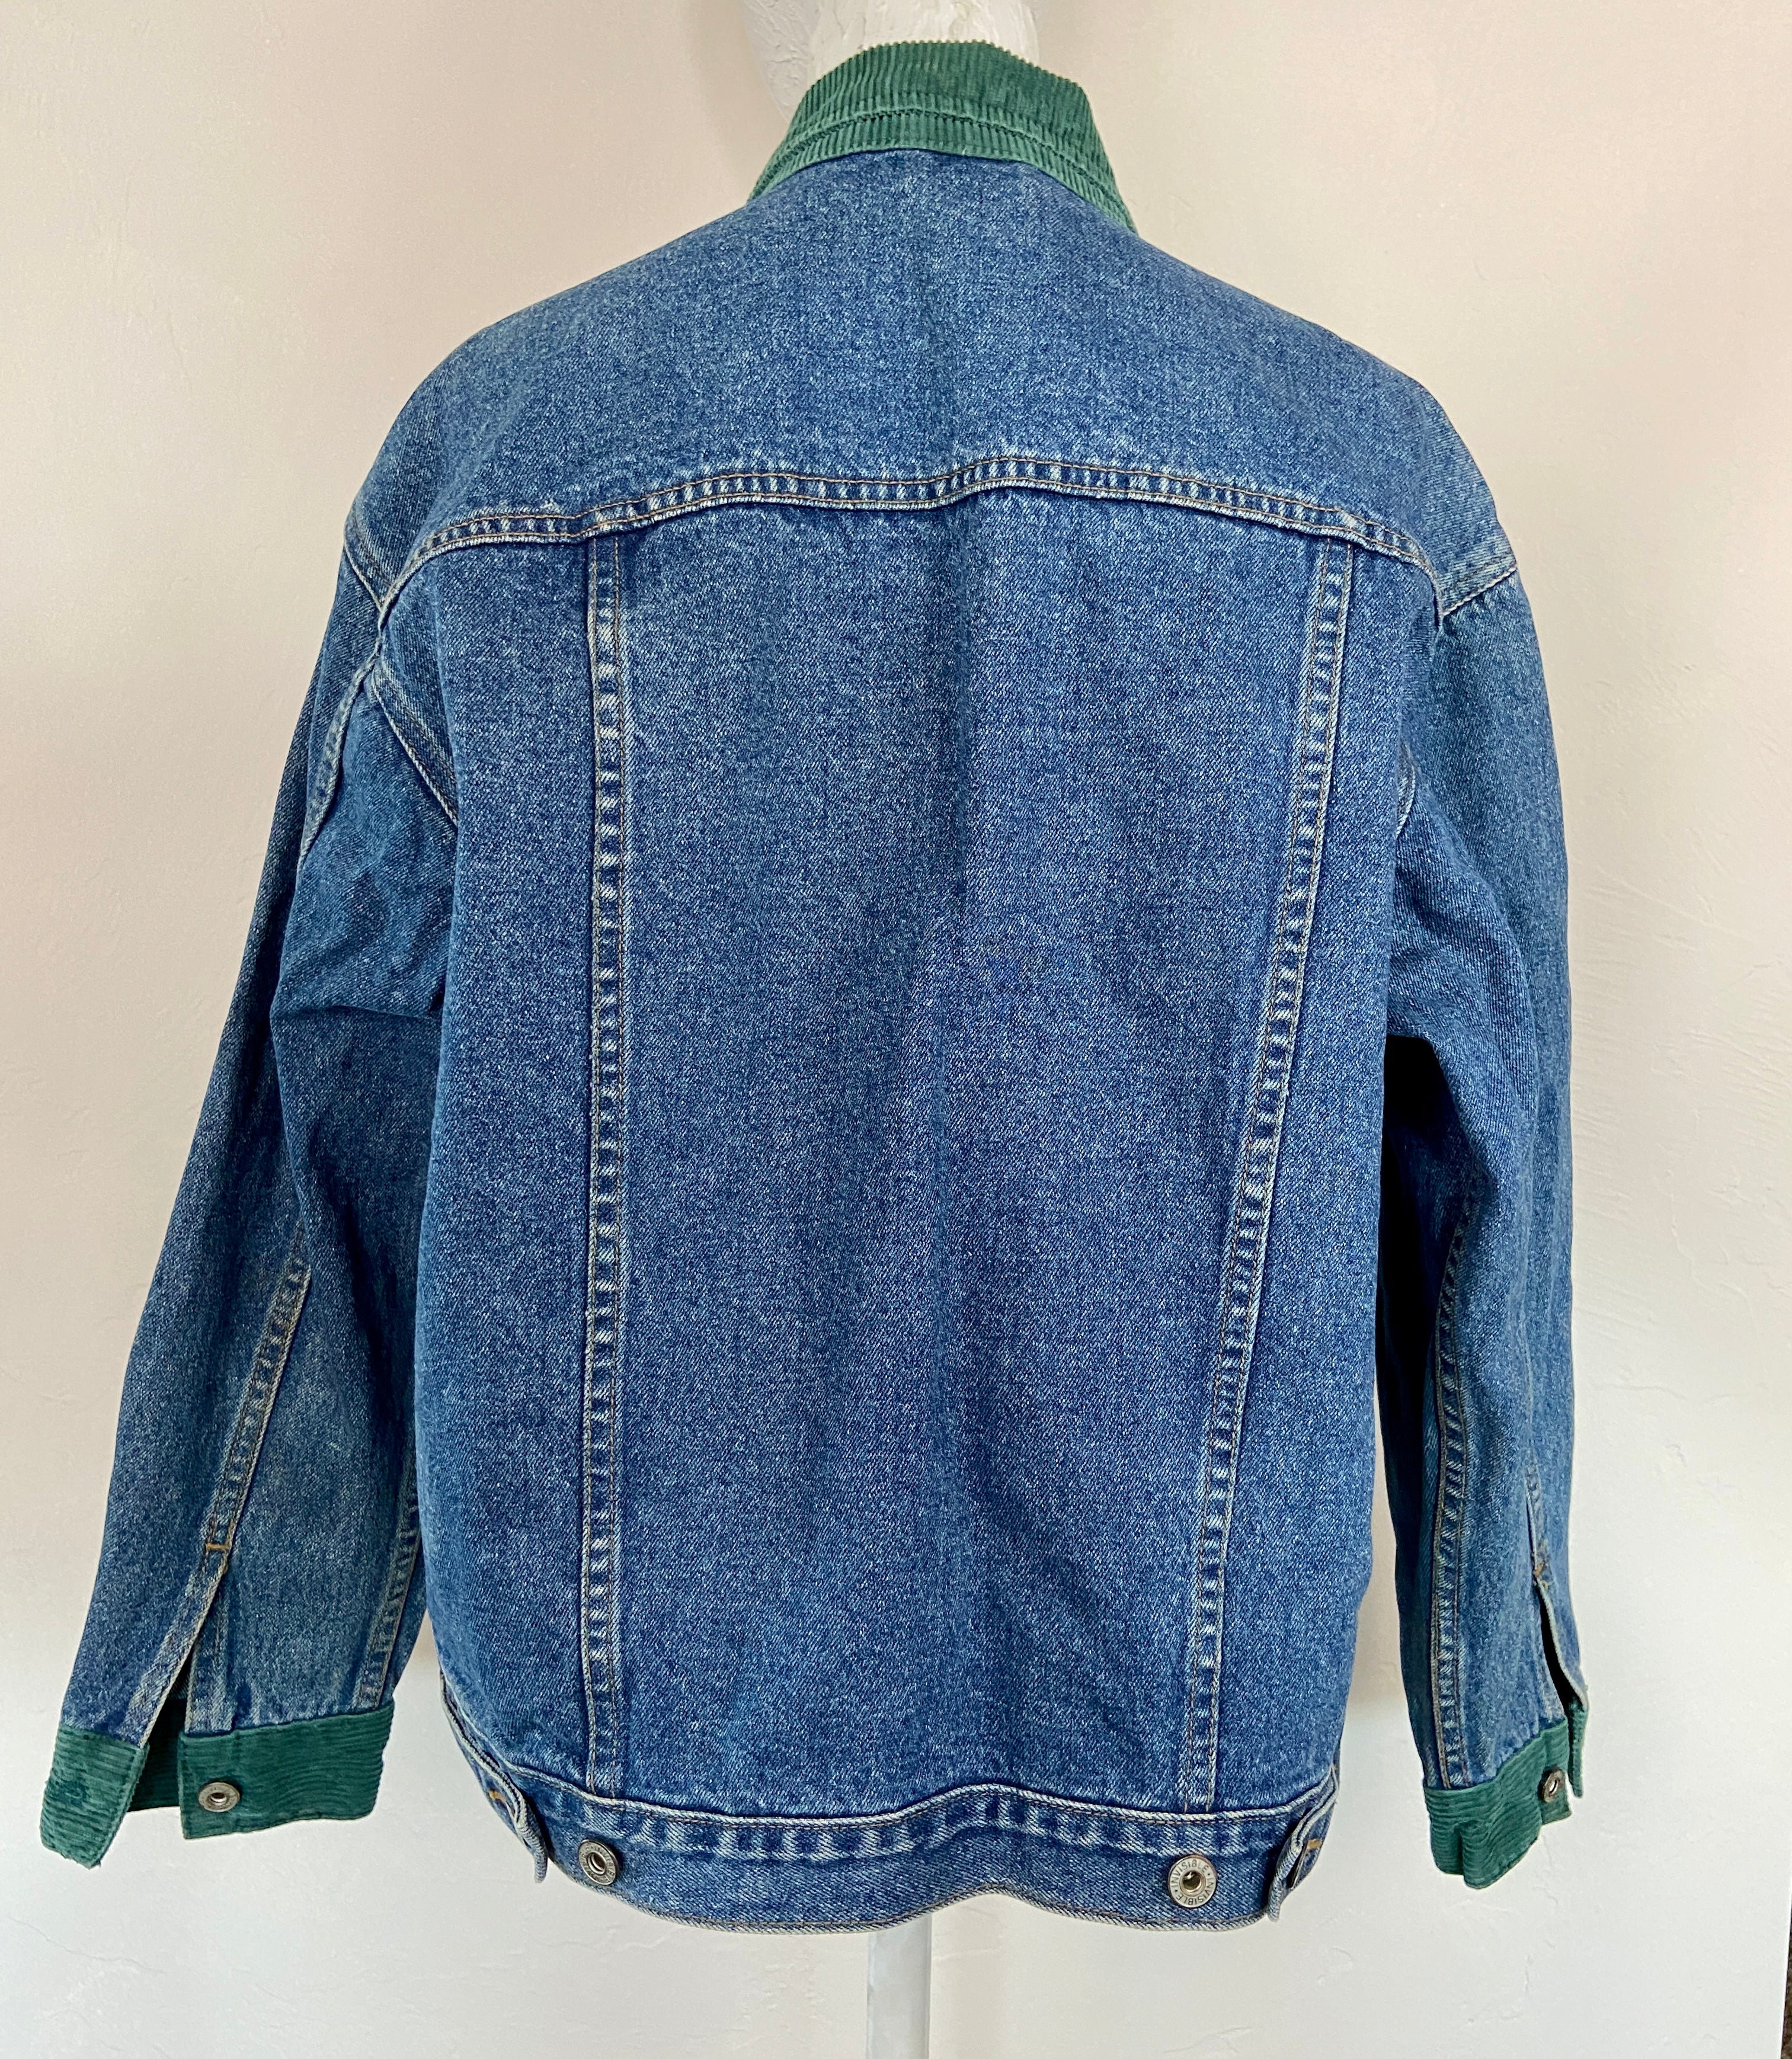 Vintage denim jacket